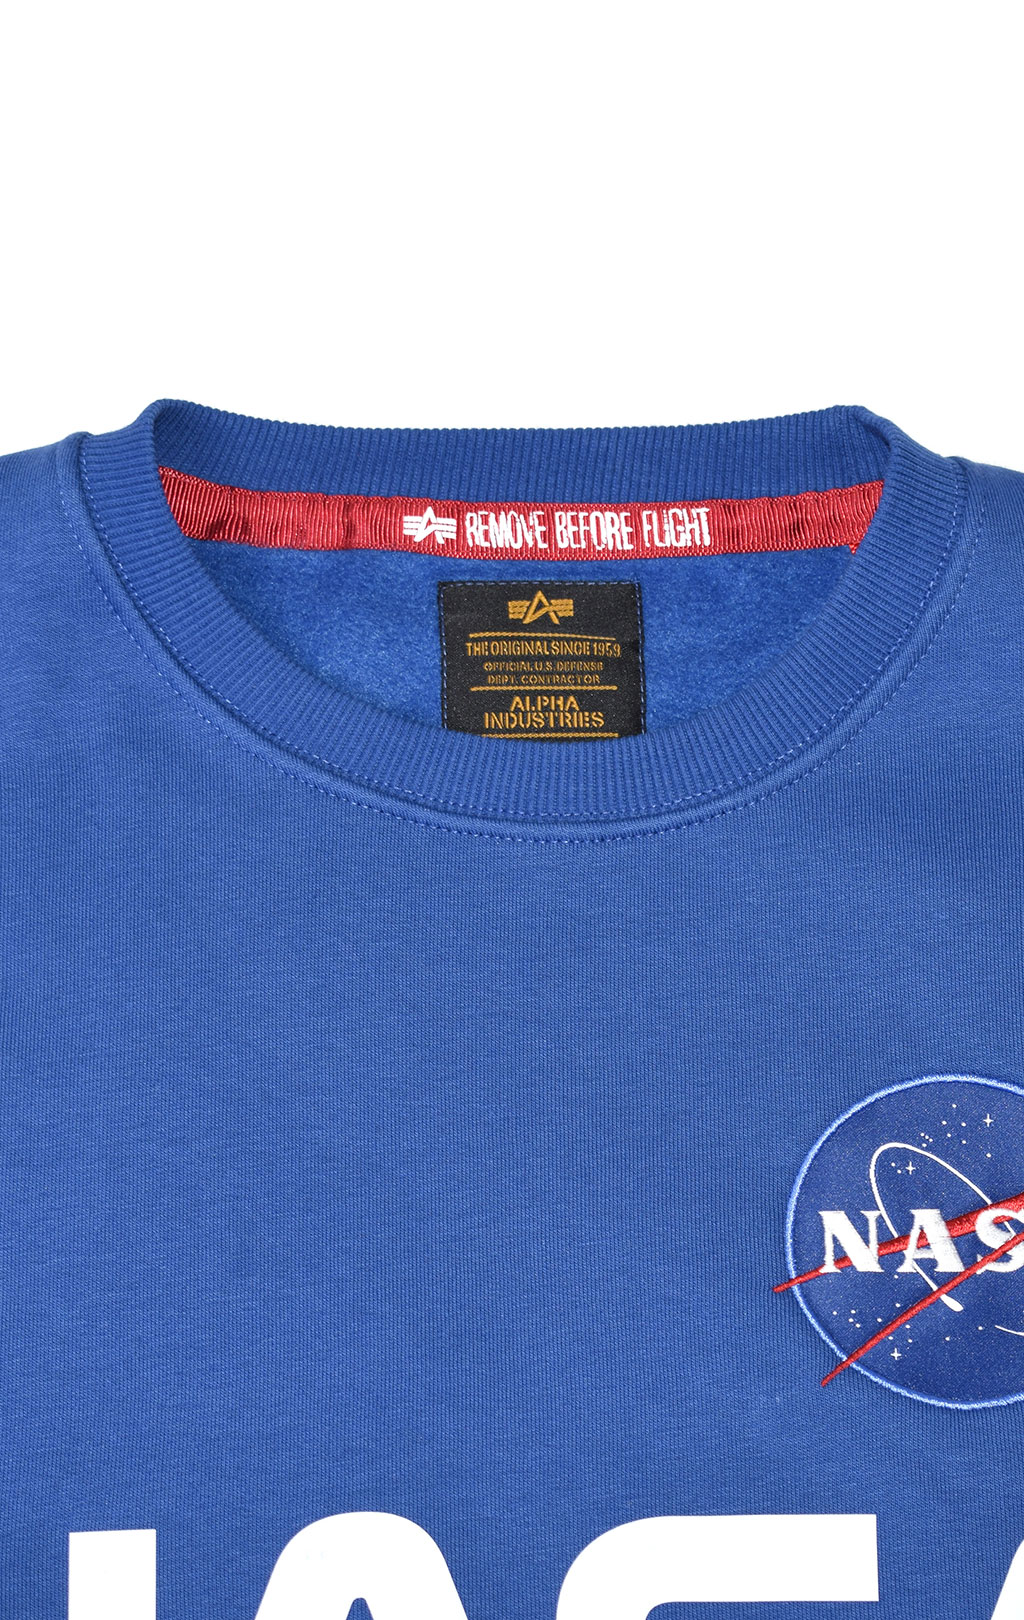 Свитшот ALPHA INDUSTRIES NASA reflective NASA blue 